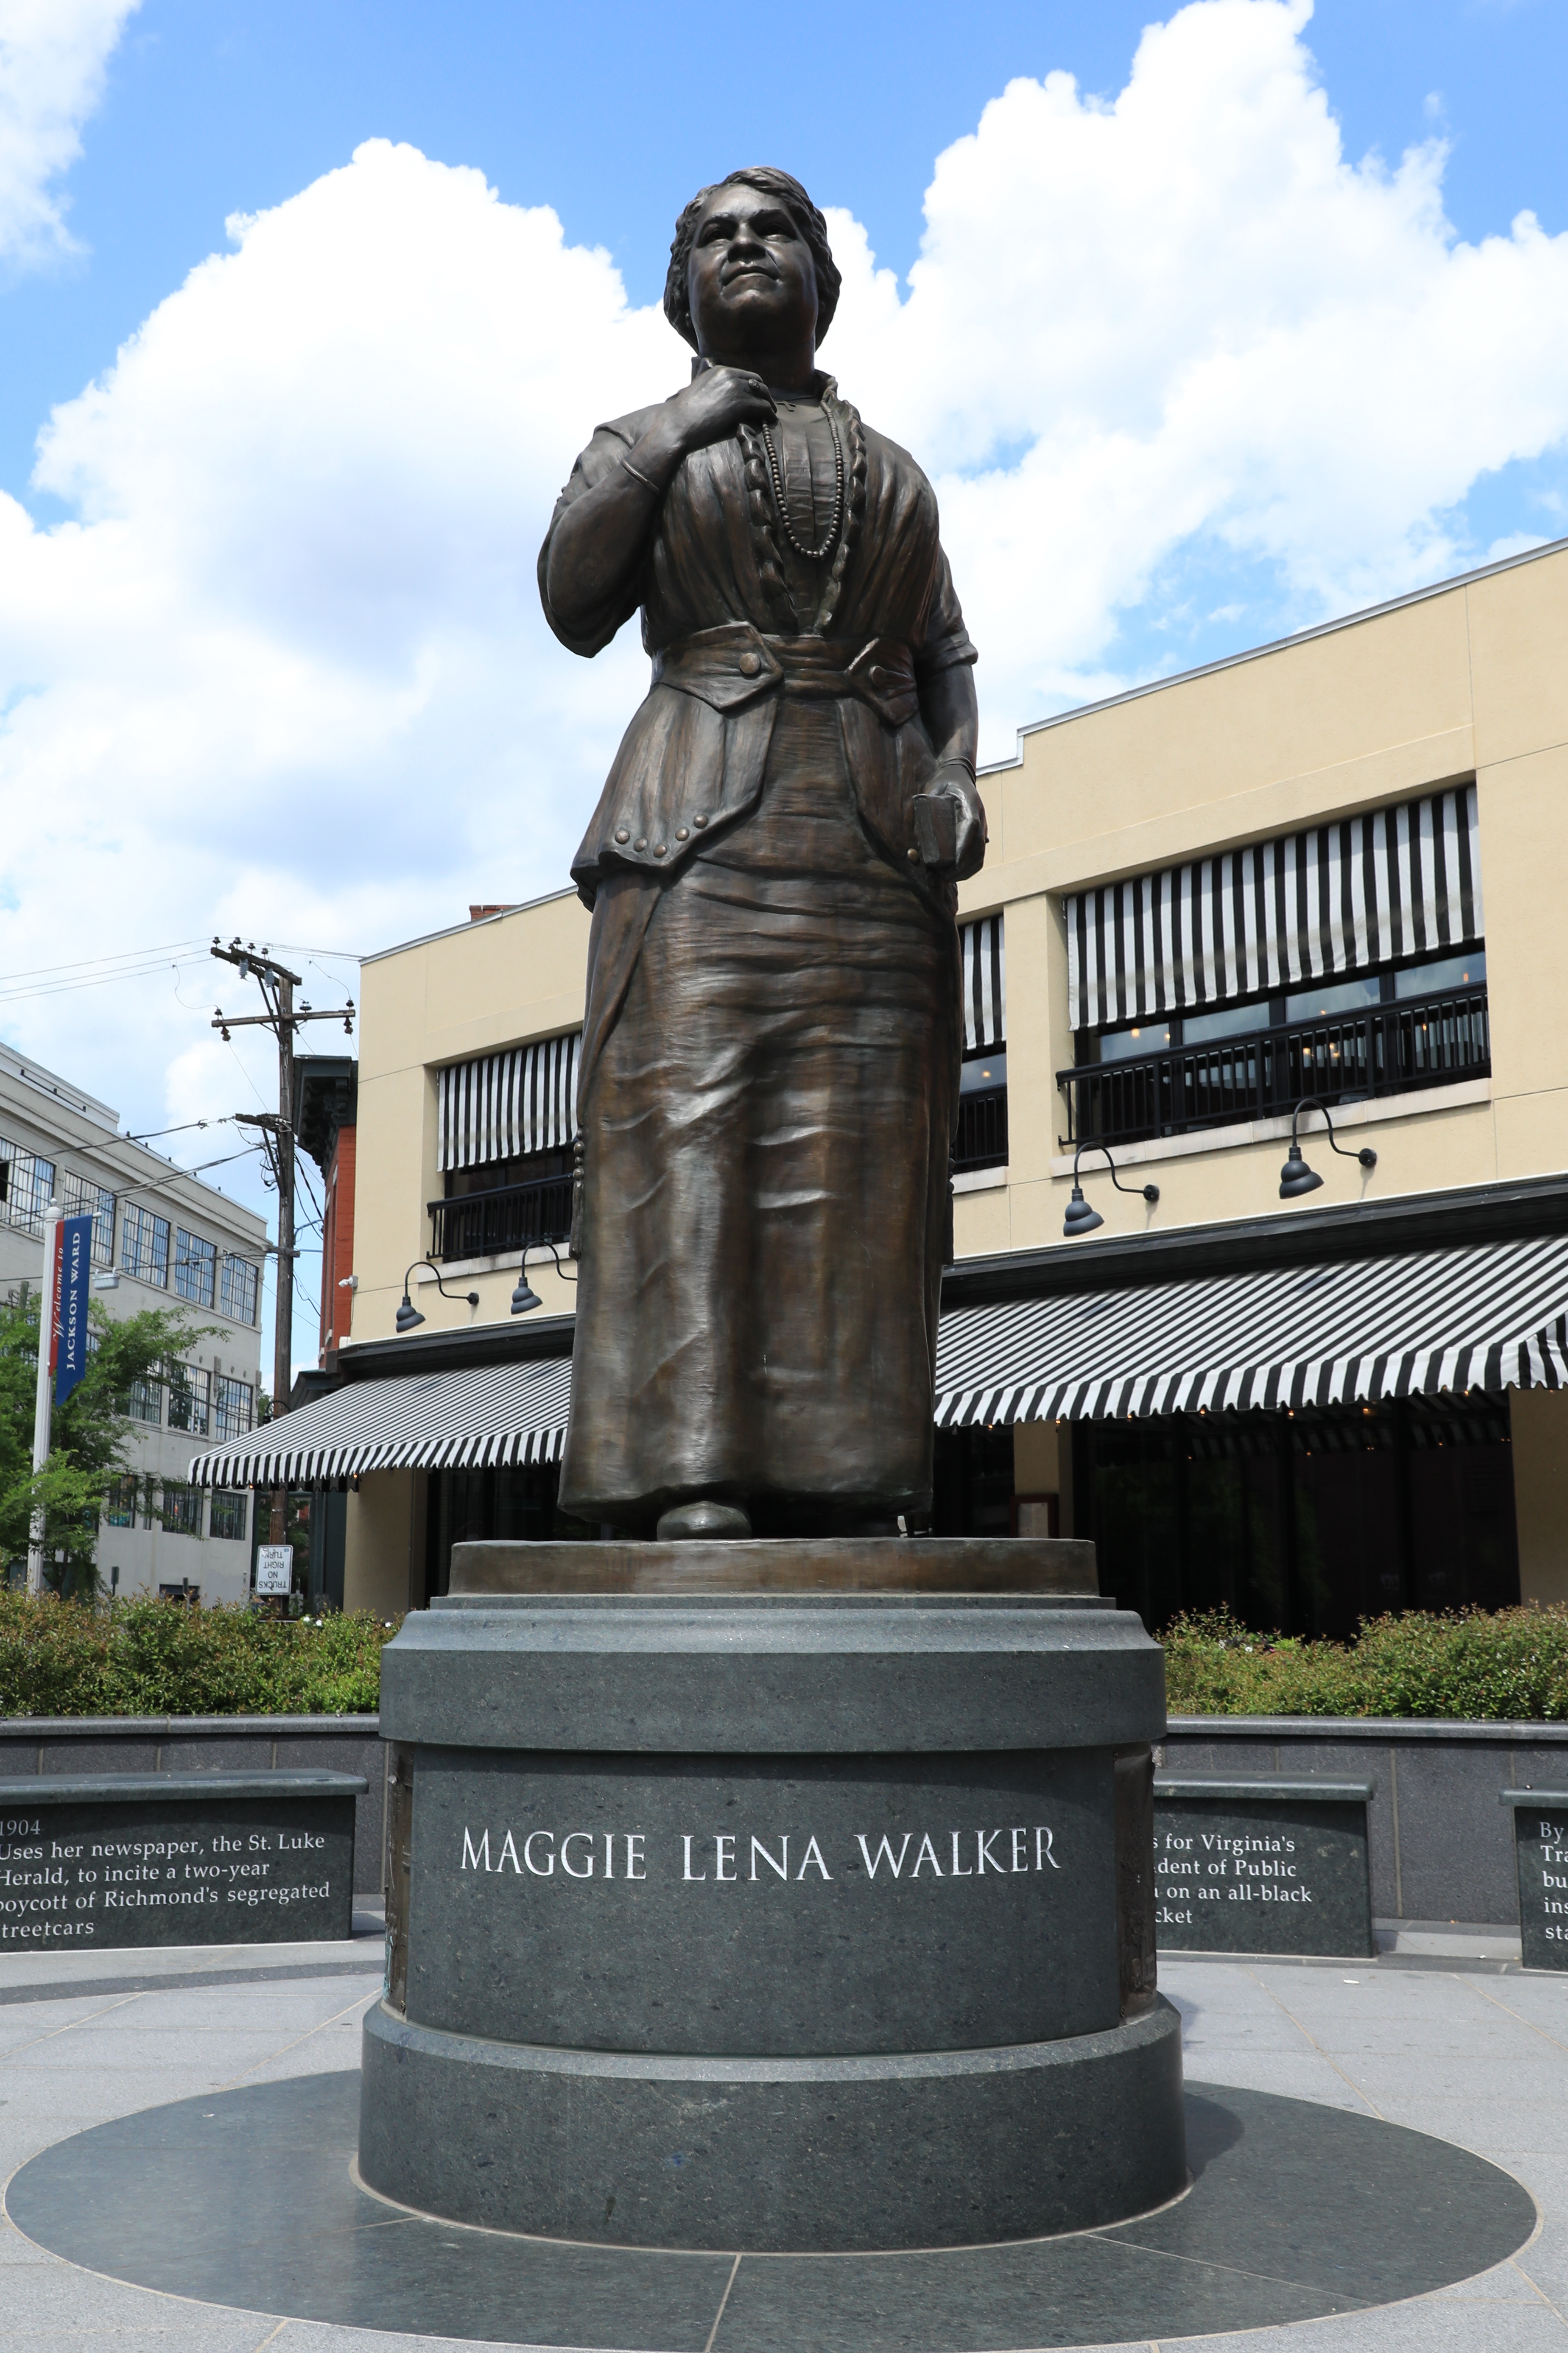 Bronze statue of Maggie L. Walker in the Maggie L. Walker Memorial Plaza, Richmond, Virginia